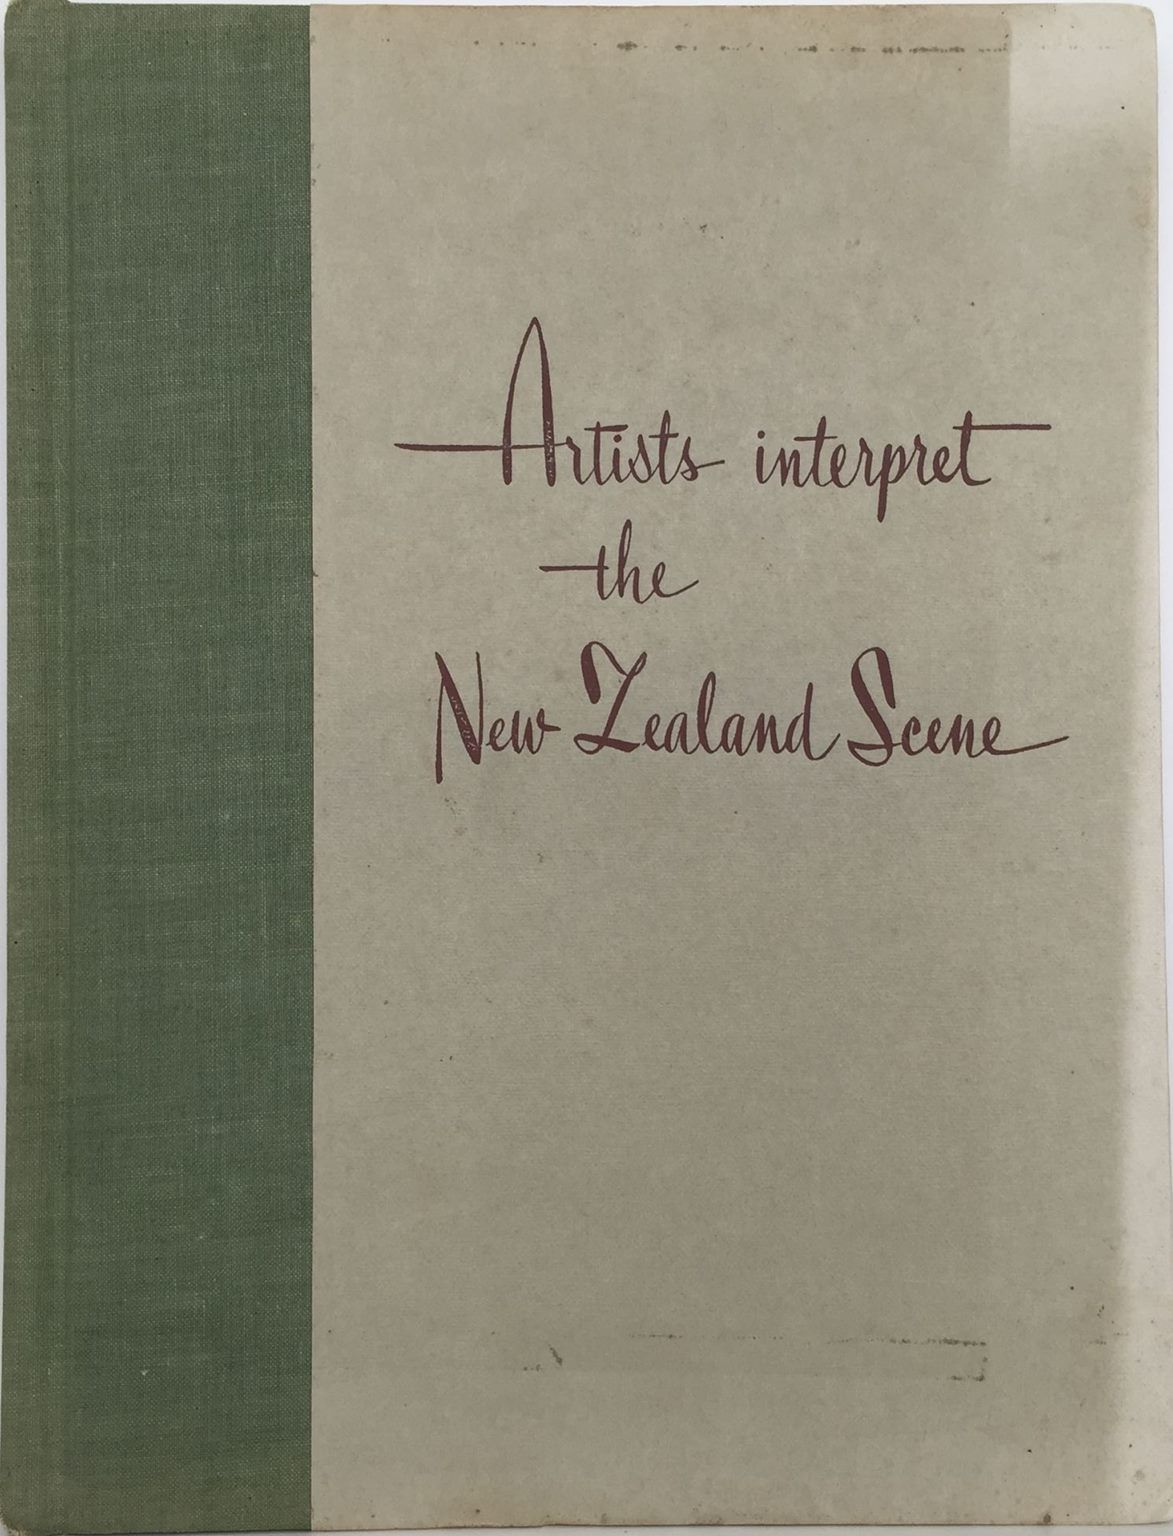 ARTISTS INTERPRET THE NEW ZEALAND SCENE